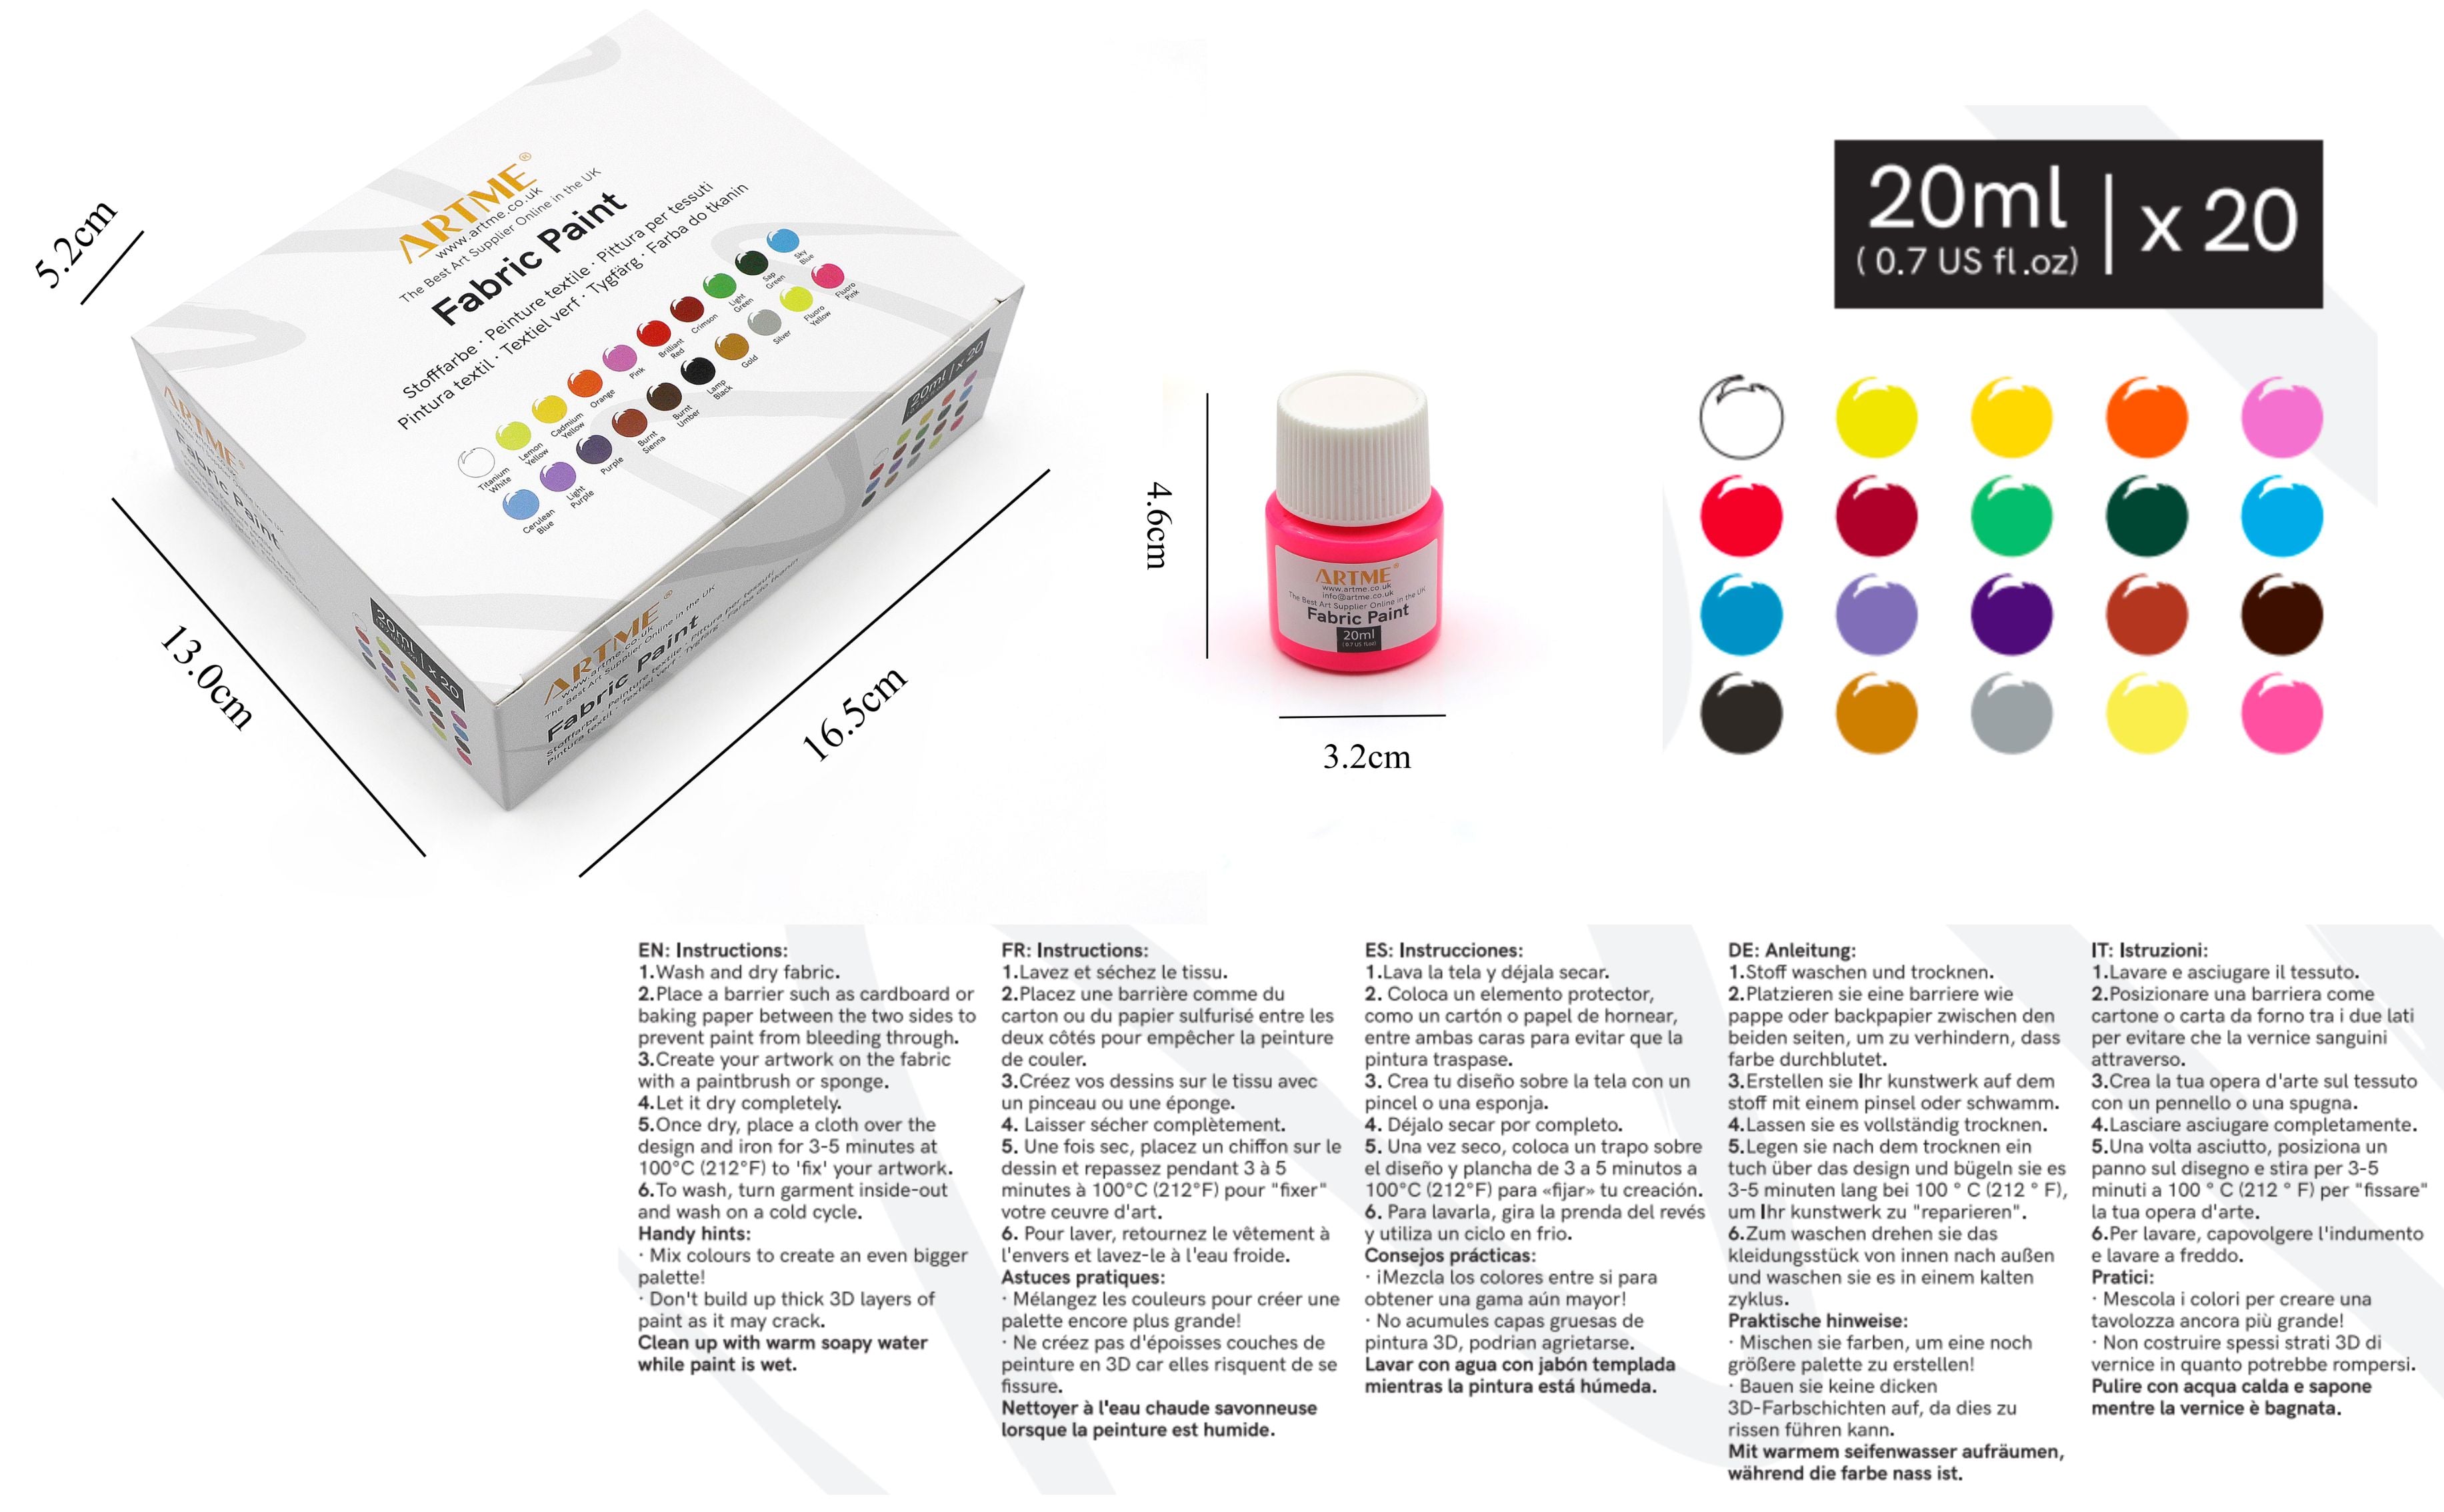 Artme Fabric Paint Set 20 Colours 20ml x 20